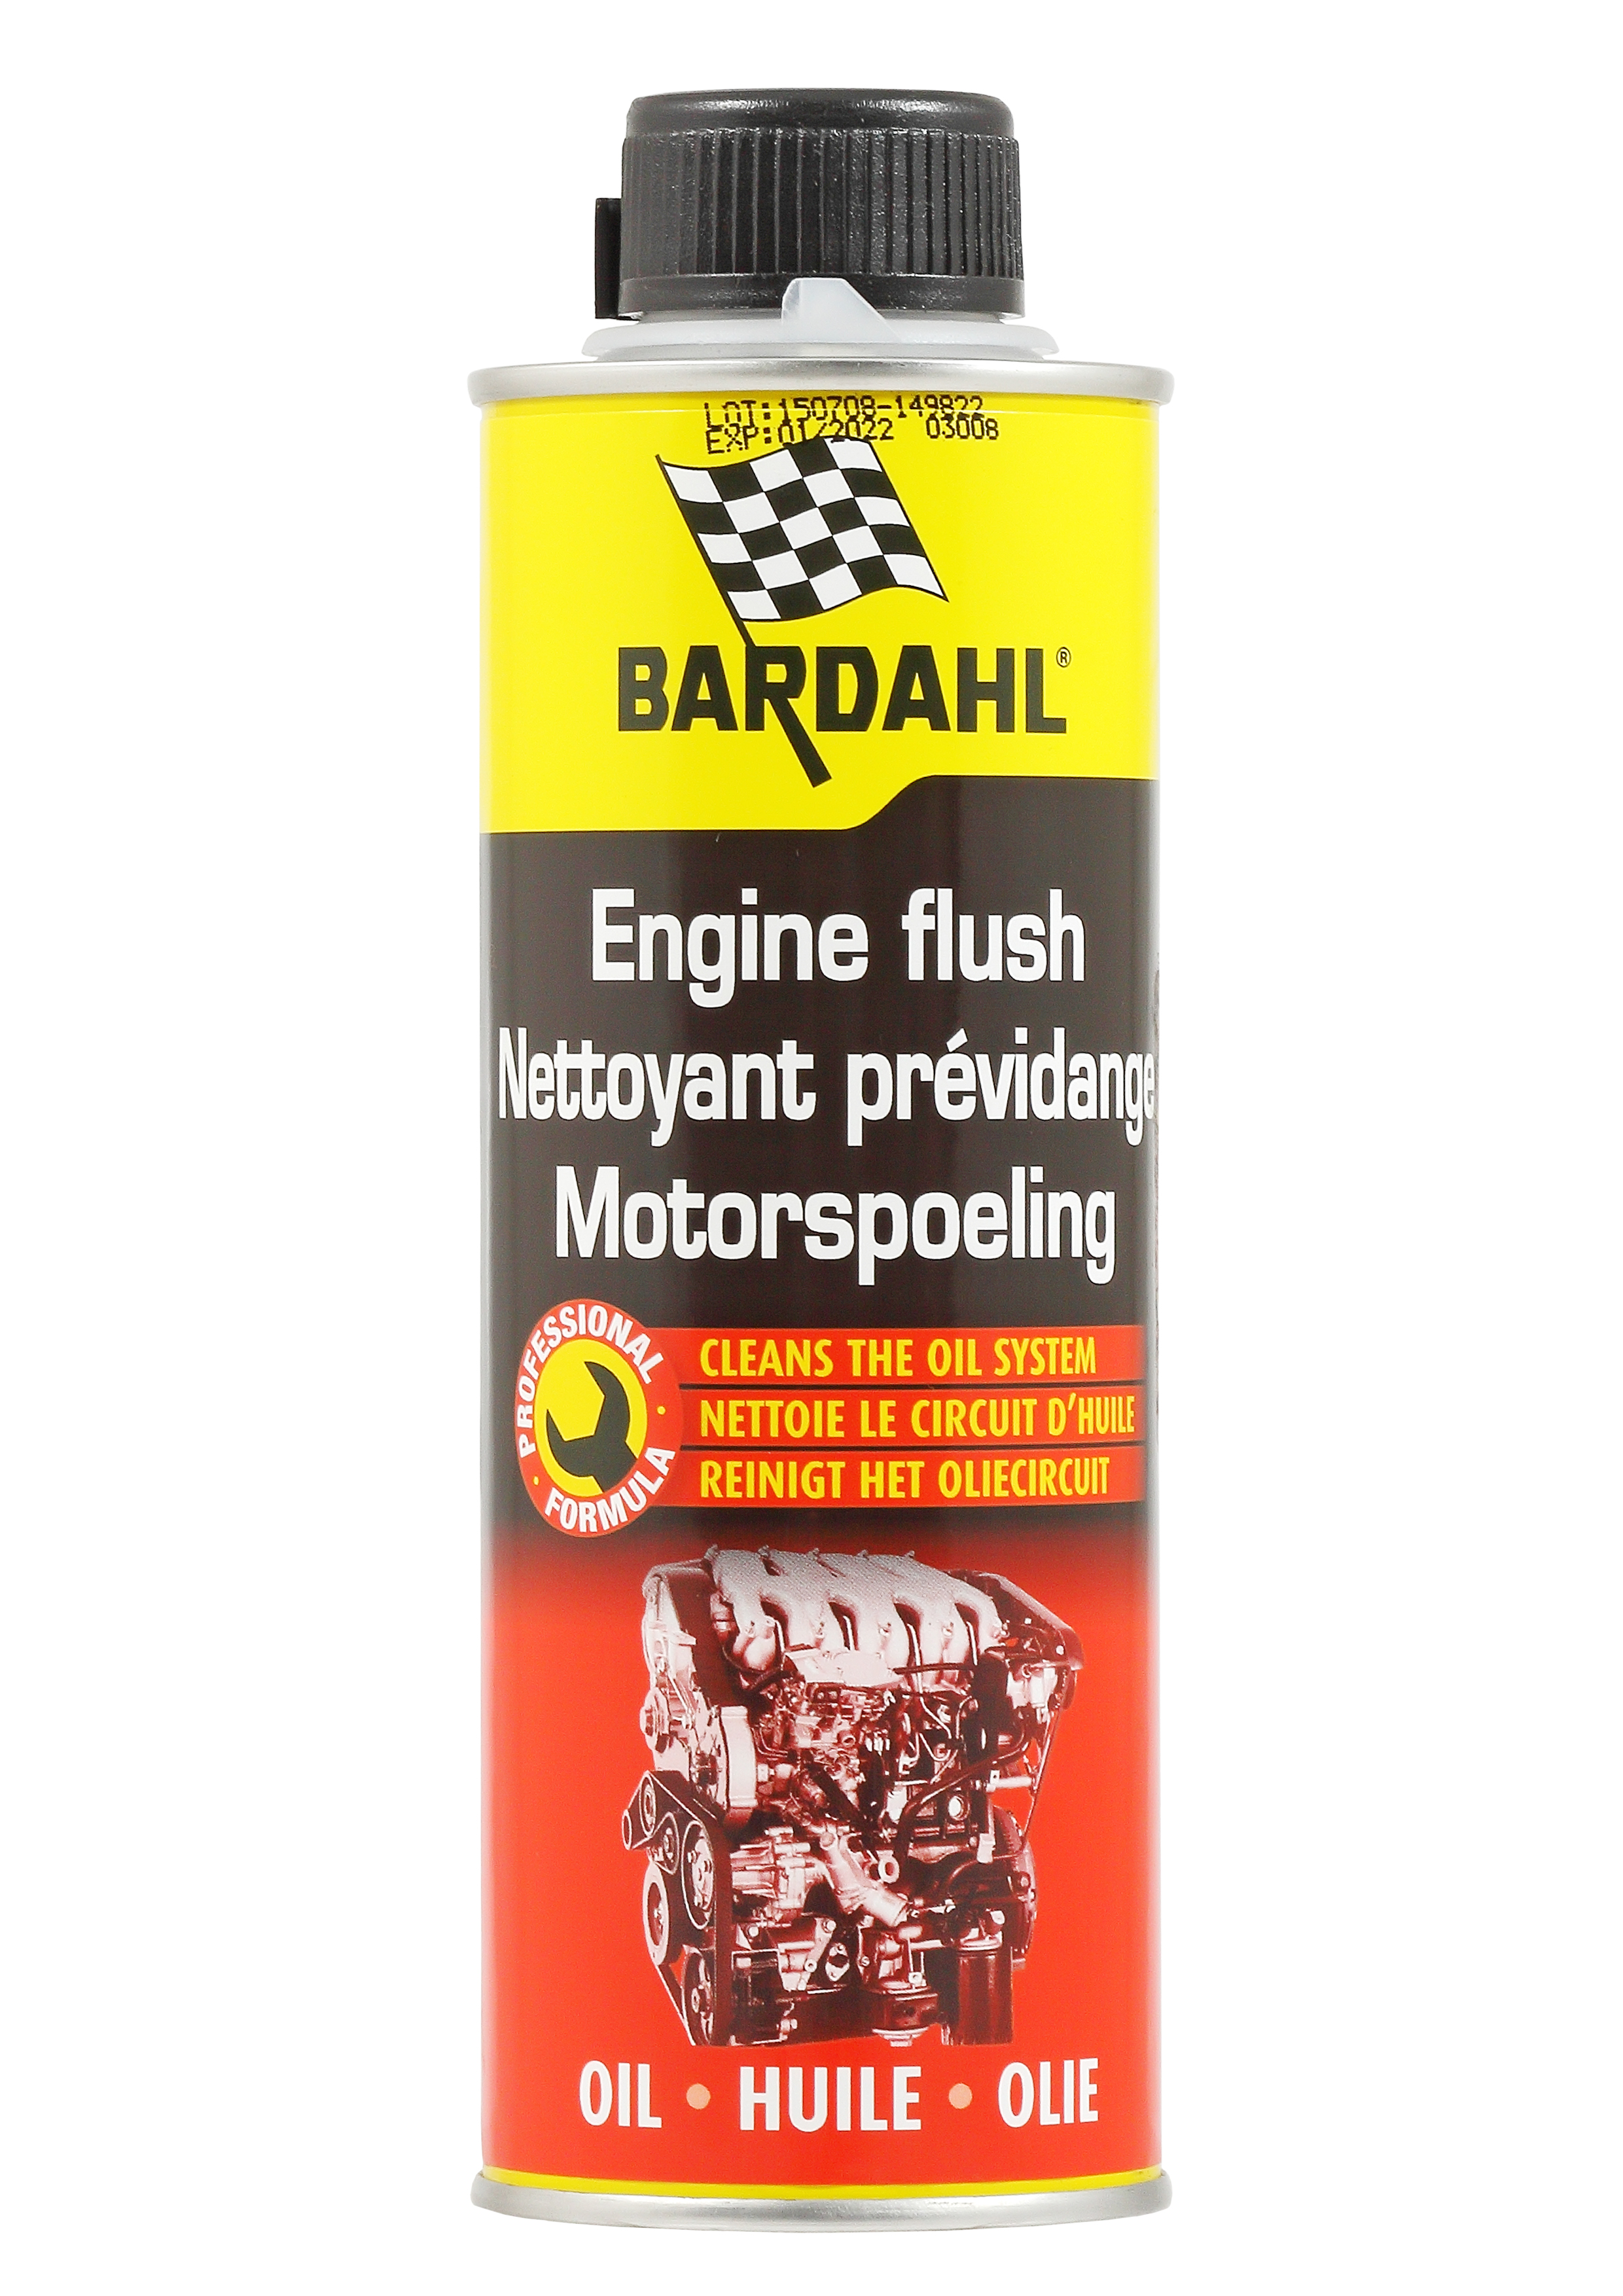 ENGINE FLUSH Промывка двигателя 15 мин 0,3л - BARDAHL 1032B